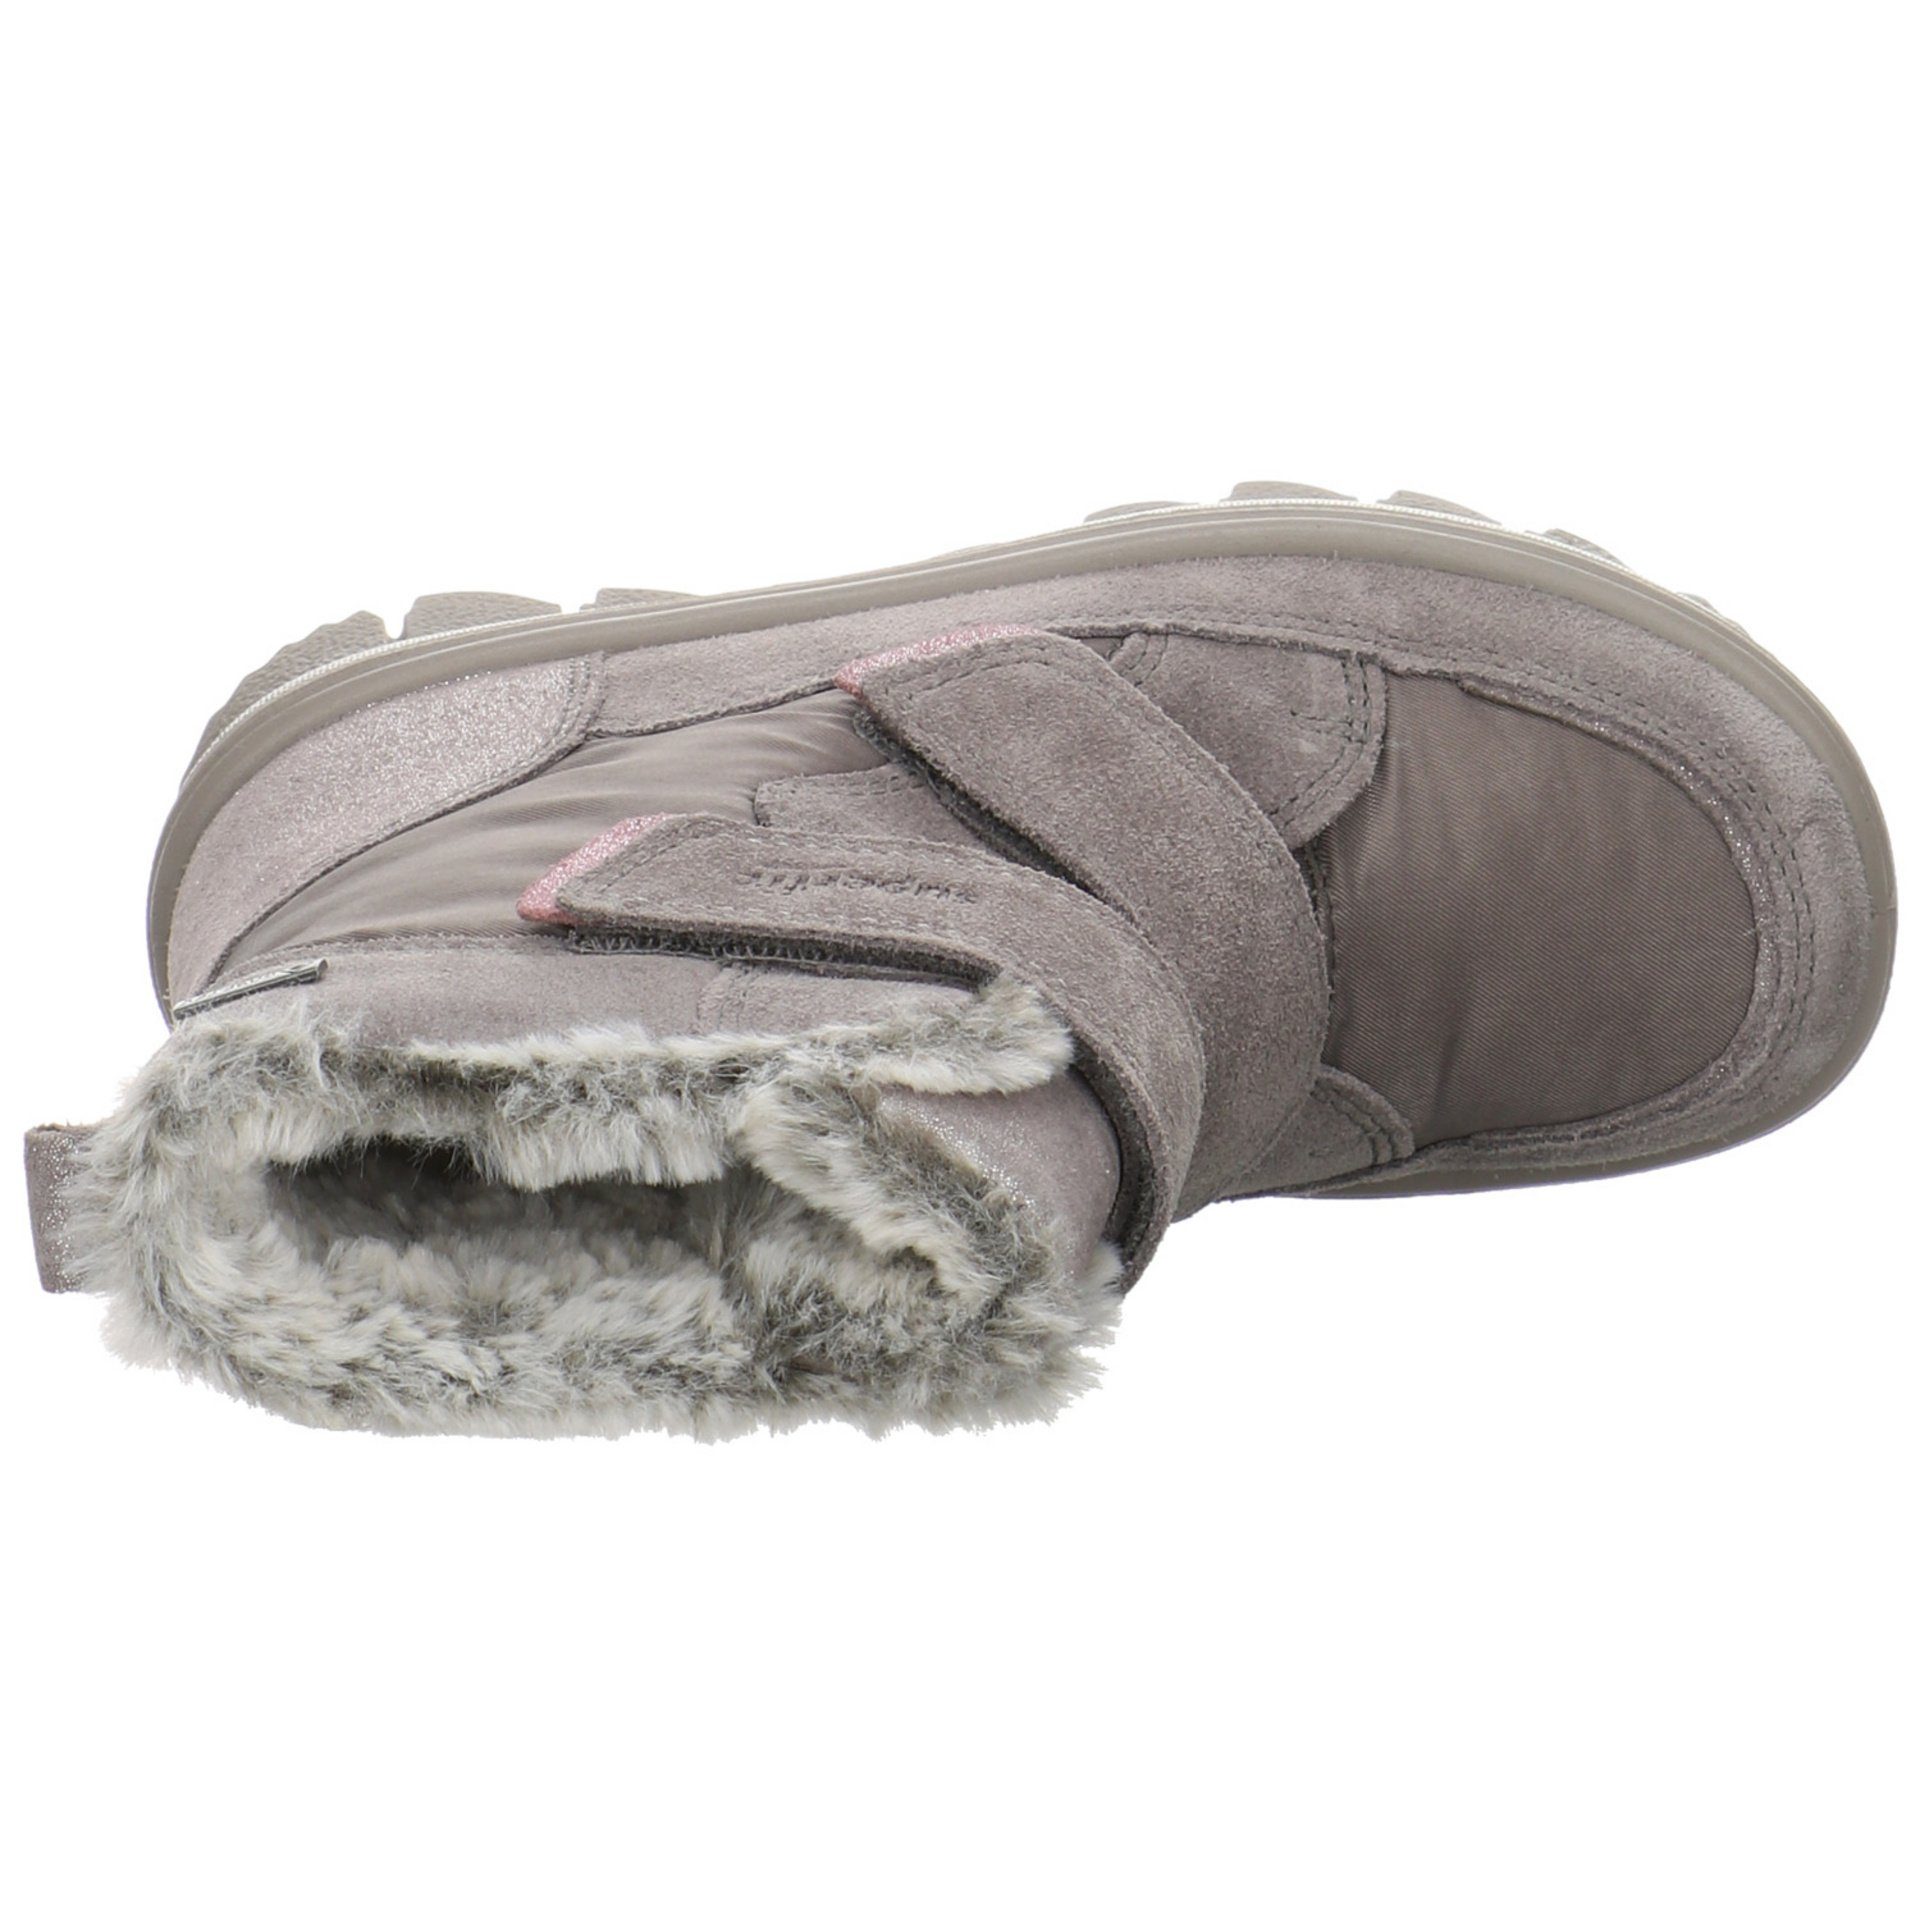 Superfit Flavia Boots Leder-/Textilkombination GRAU/PINK uni Winterboots Leder-/Textilkombination